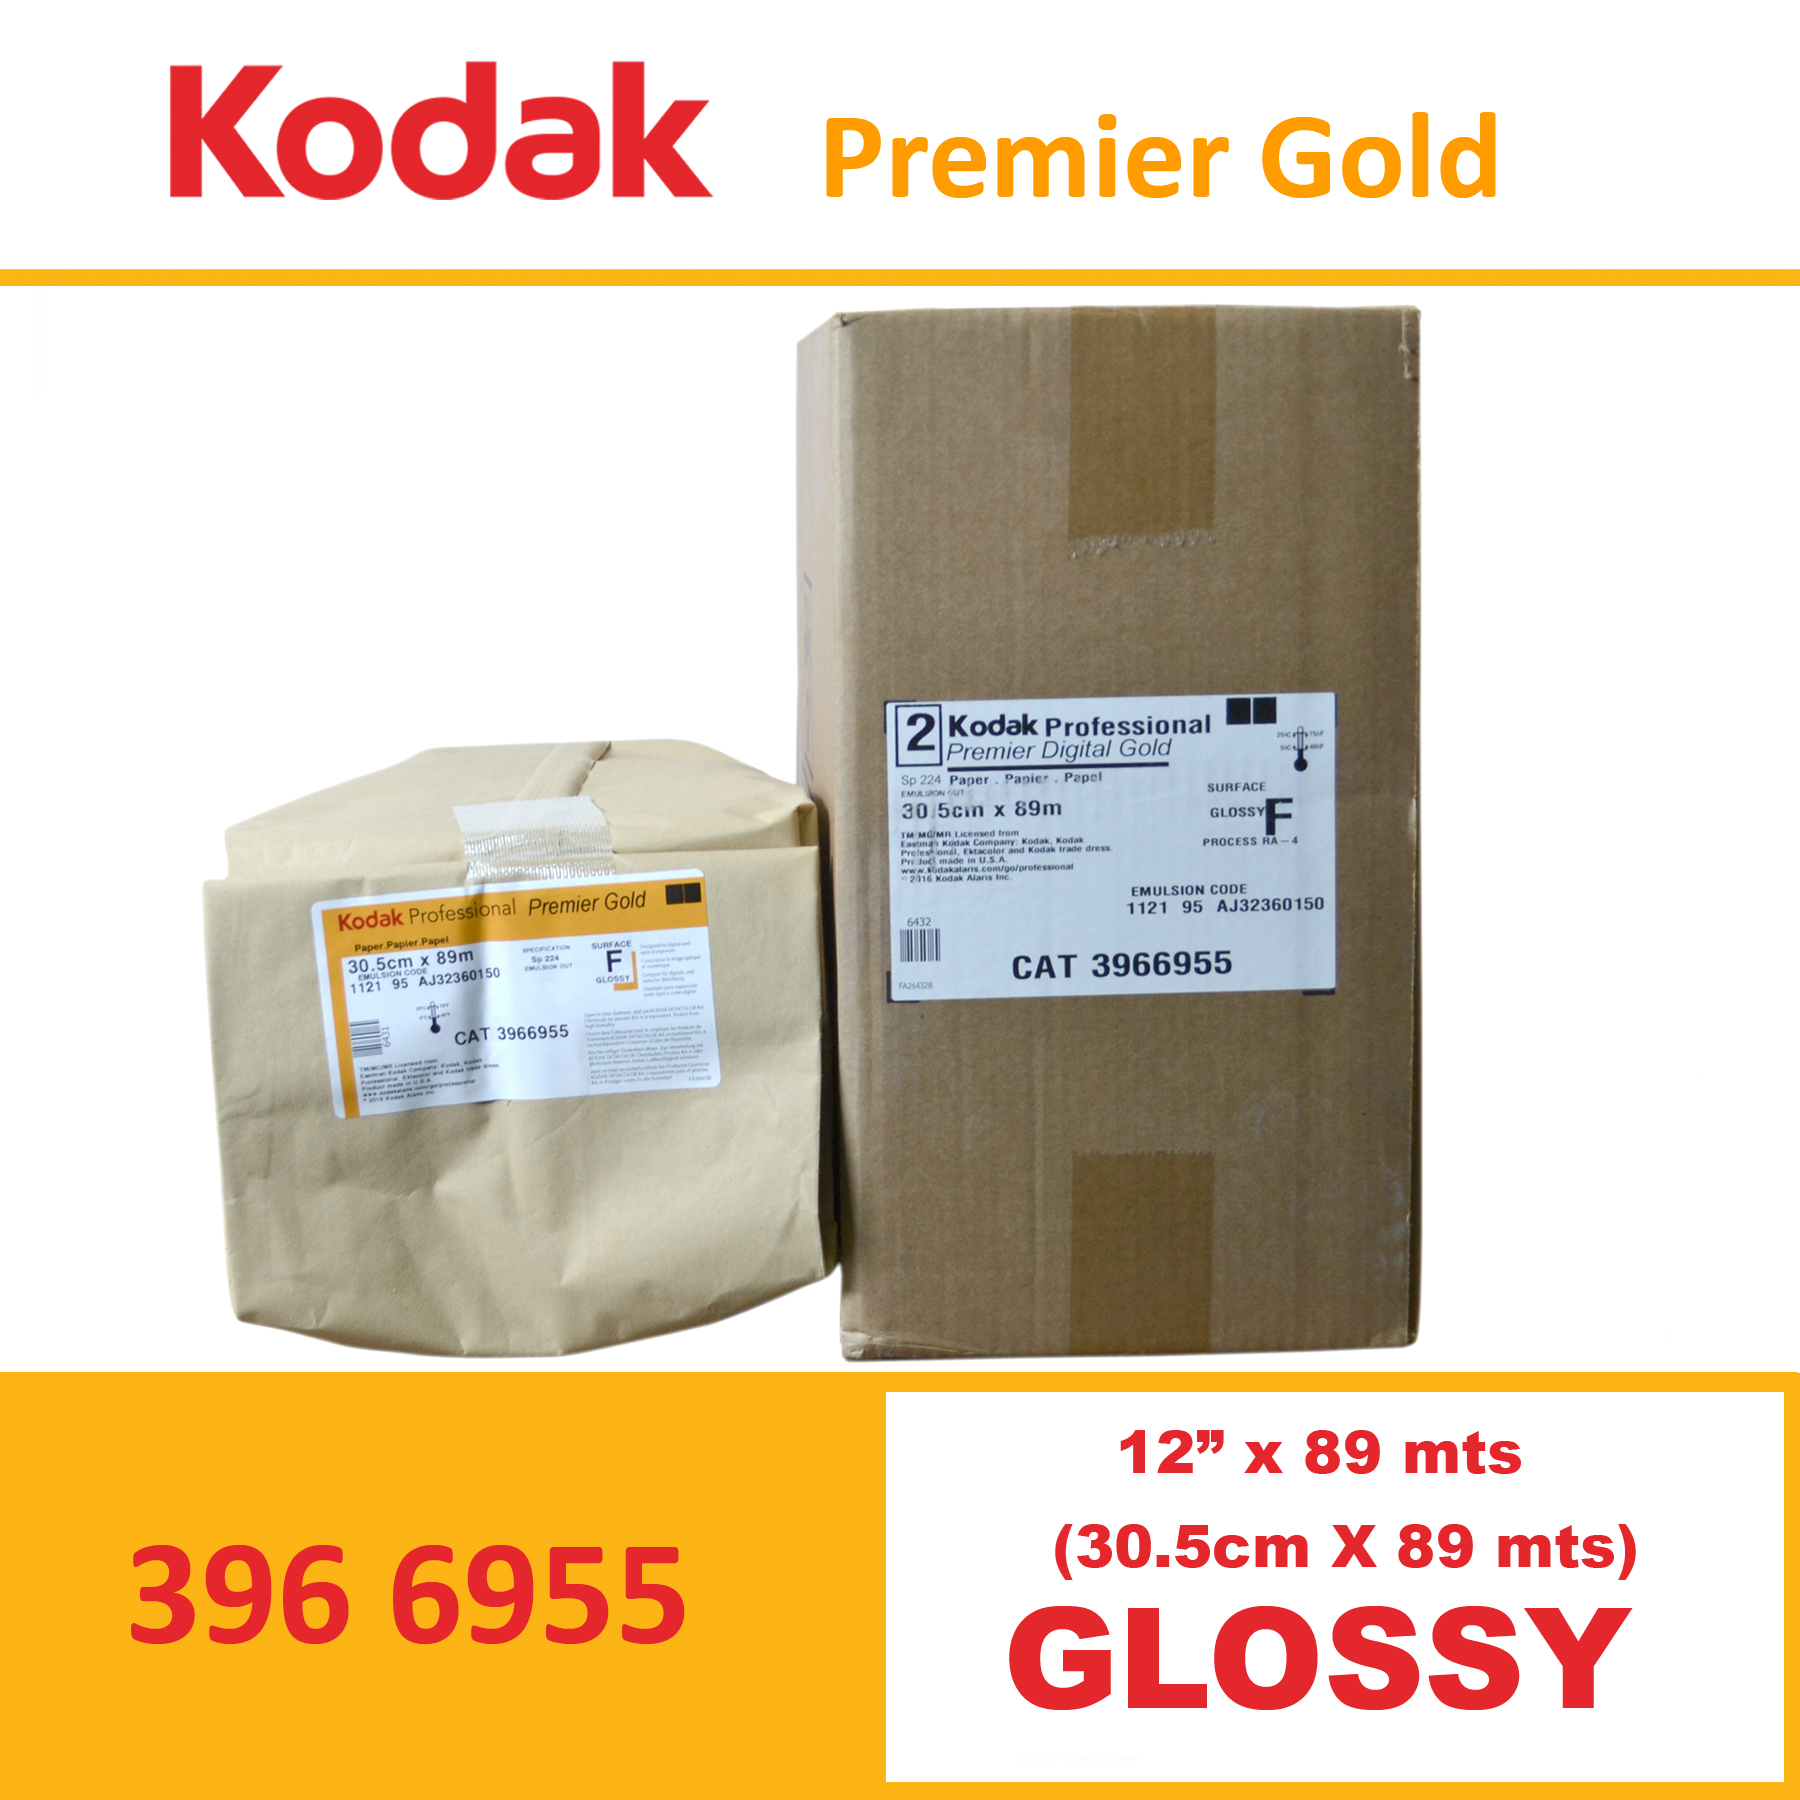 Kodak 12”  Premier Digital Gold Glossy